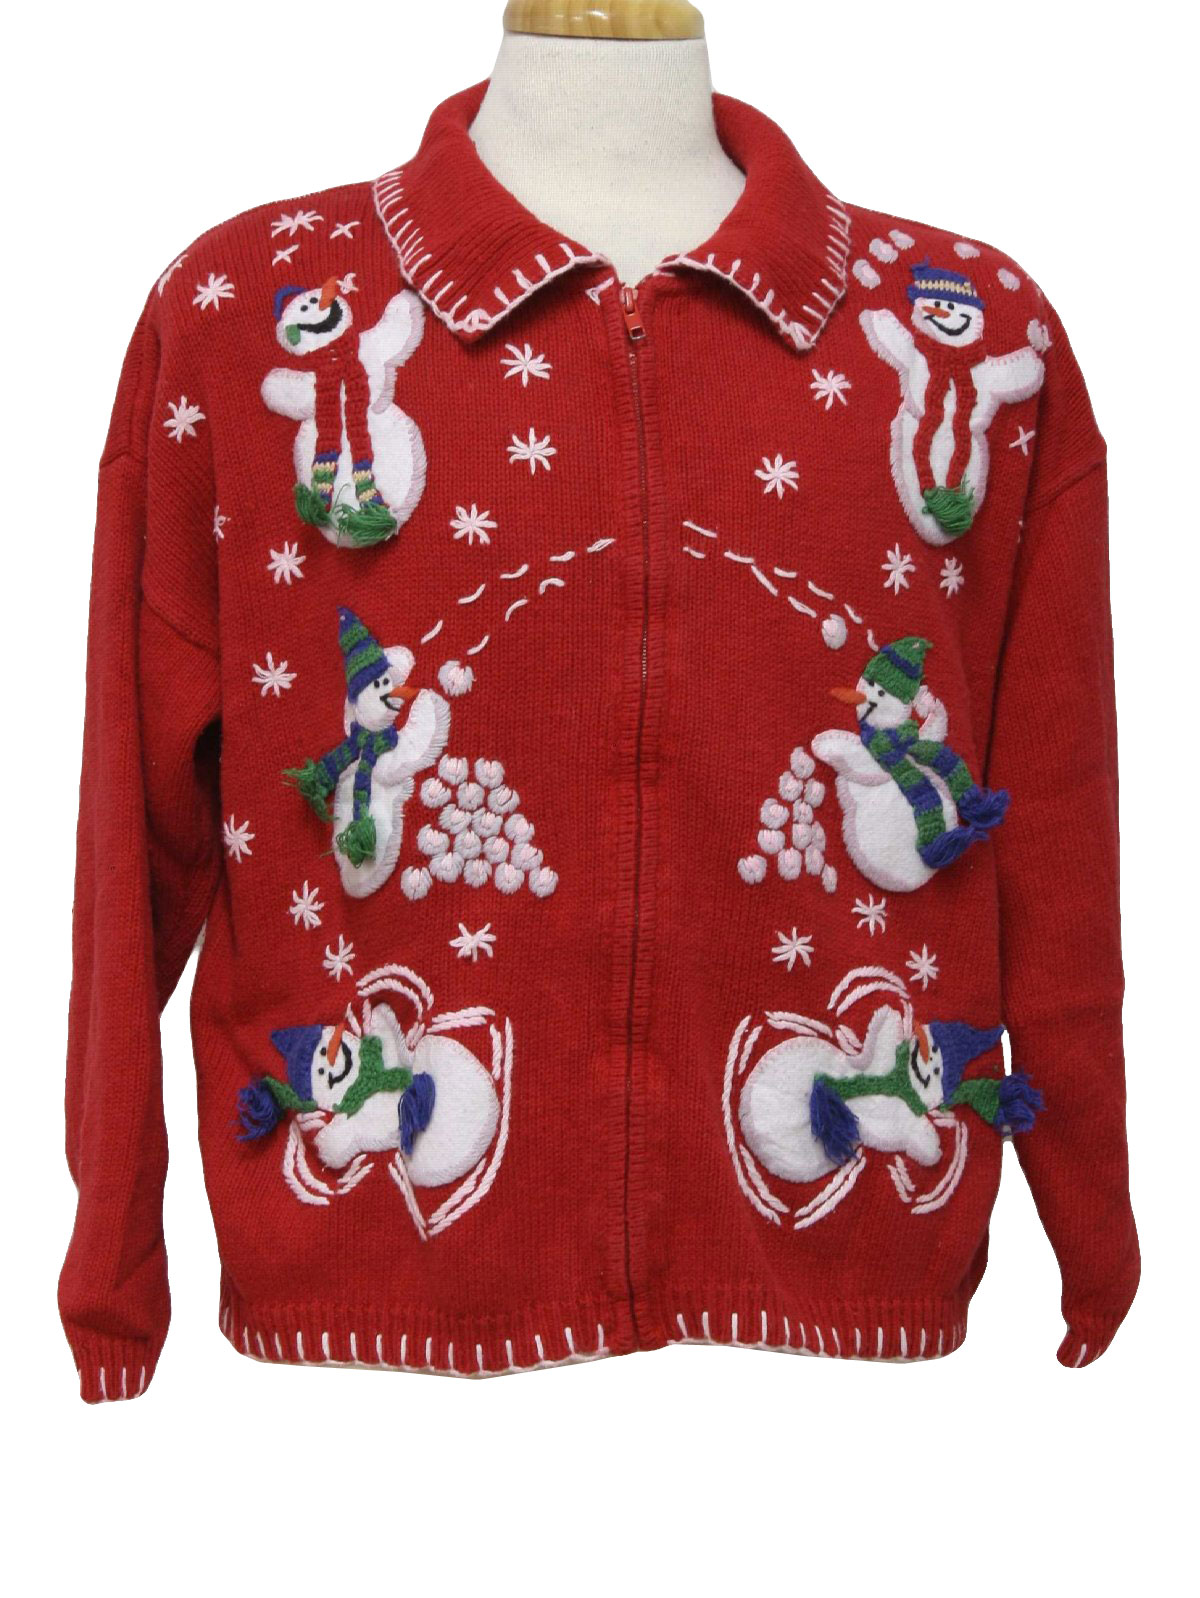 Ugly Christmas Sweater: -Tiara International Petites- Unisex bright red